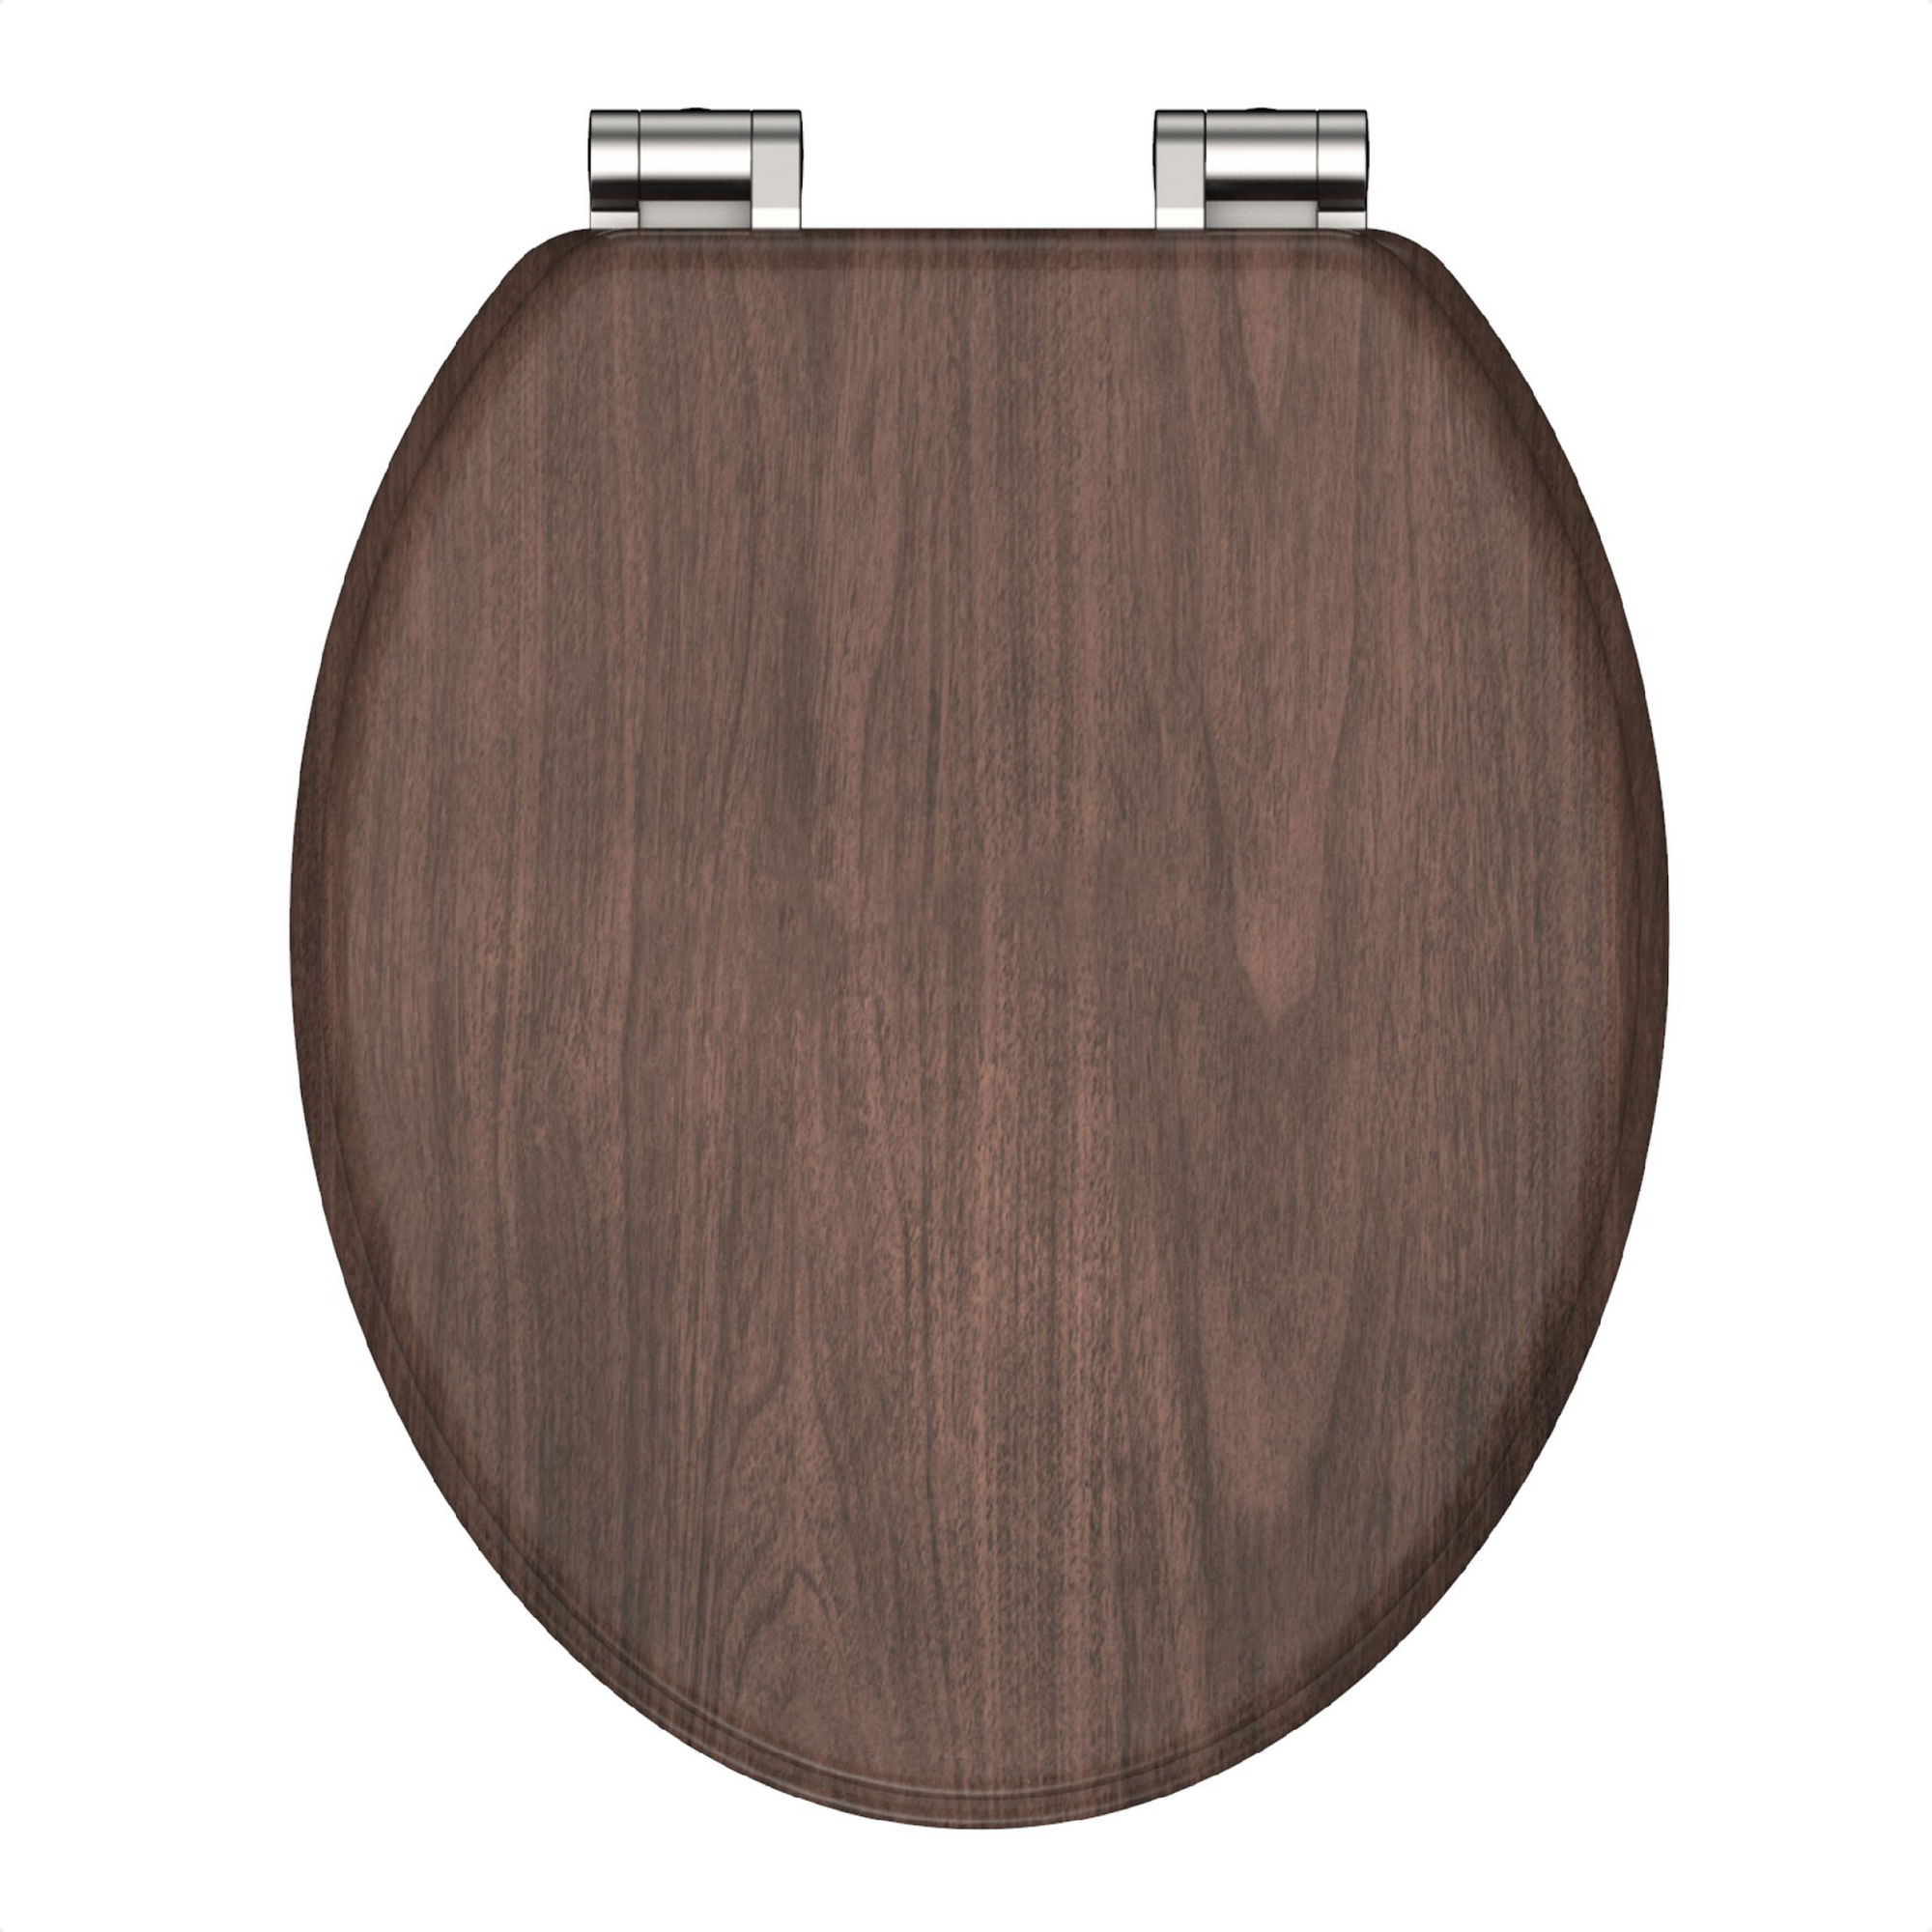 WC-Sitz 'Dark Wood' mit Absenkautomatik dunkelbraun 37,5 x 43,5 cm + product picture